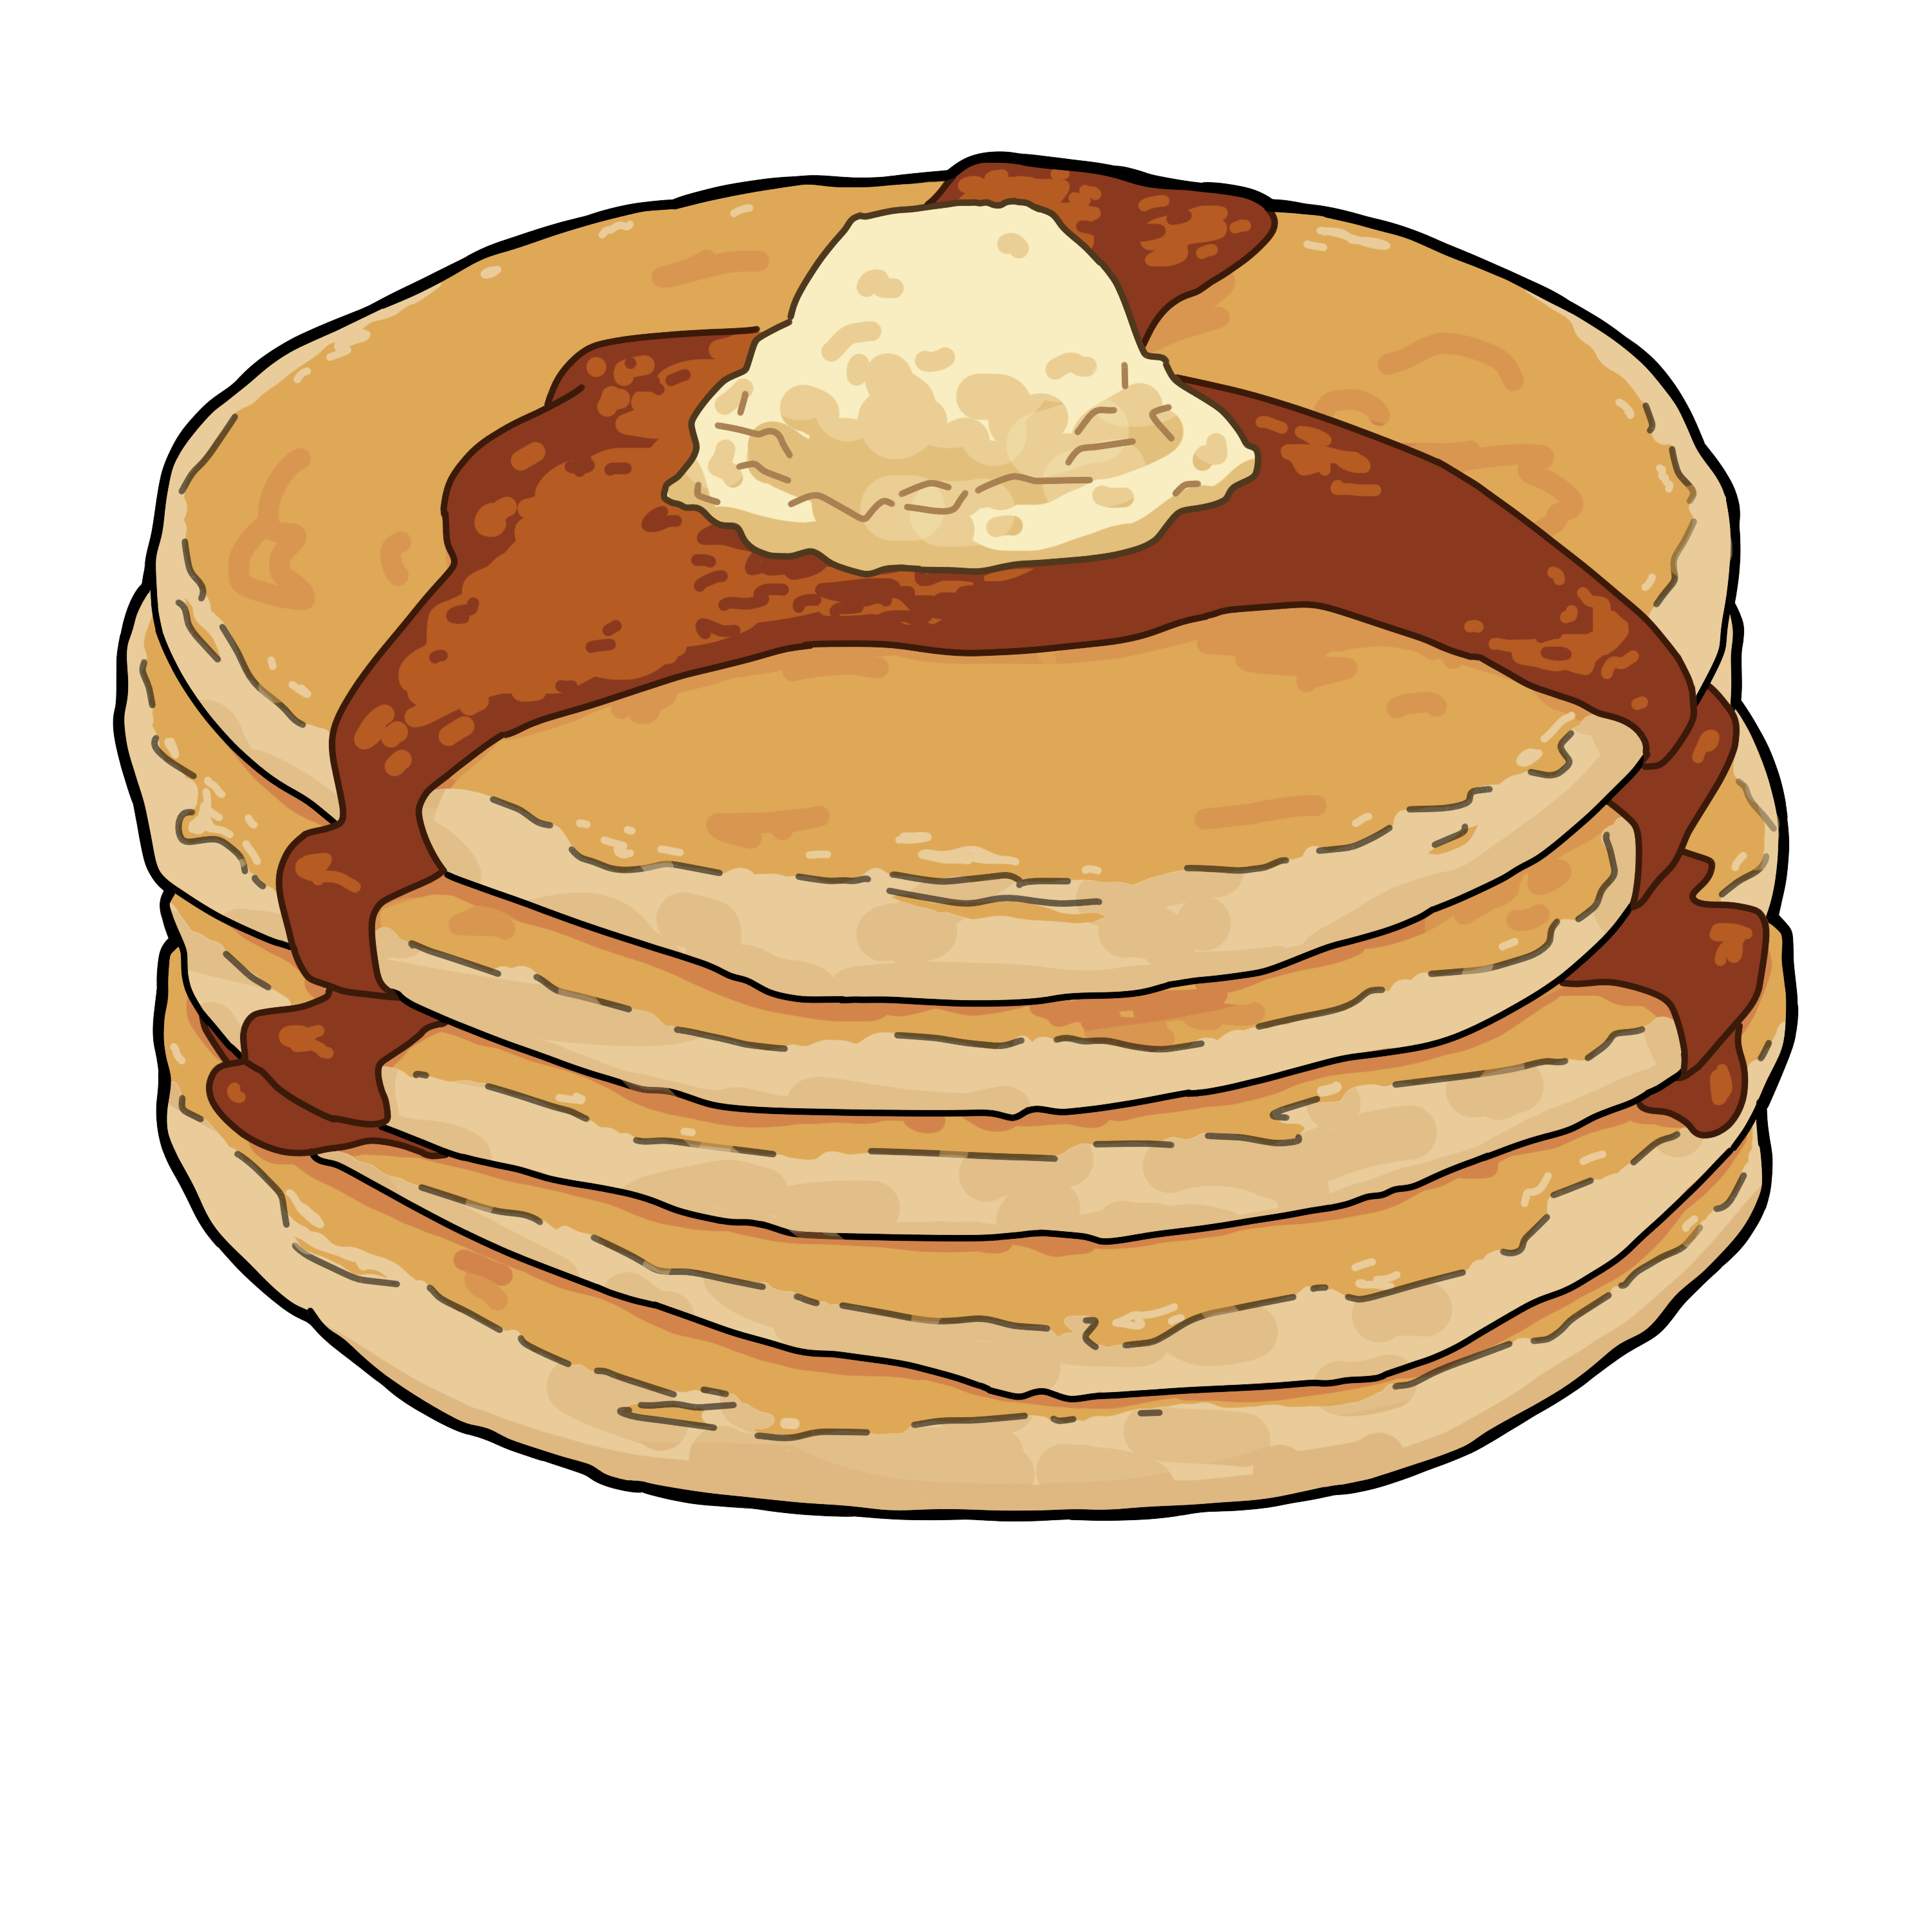 Ipad pancakes drawing my. Cook clipart pancake